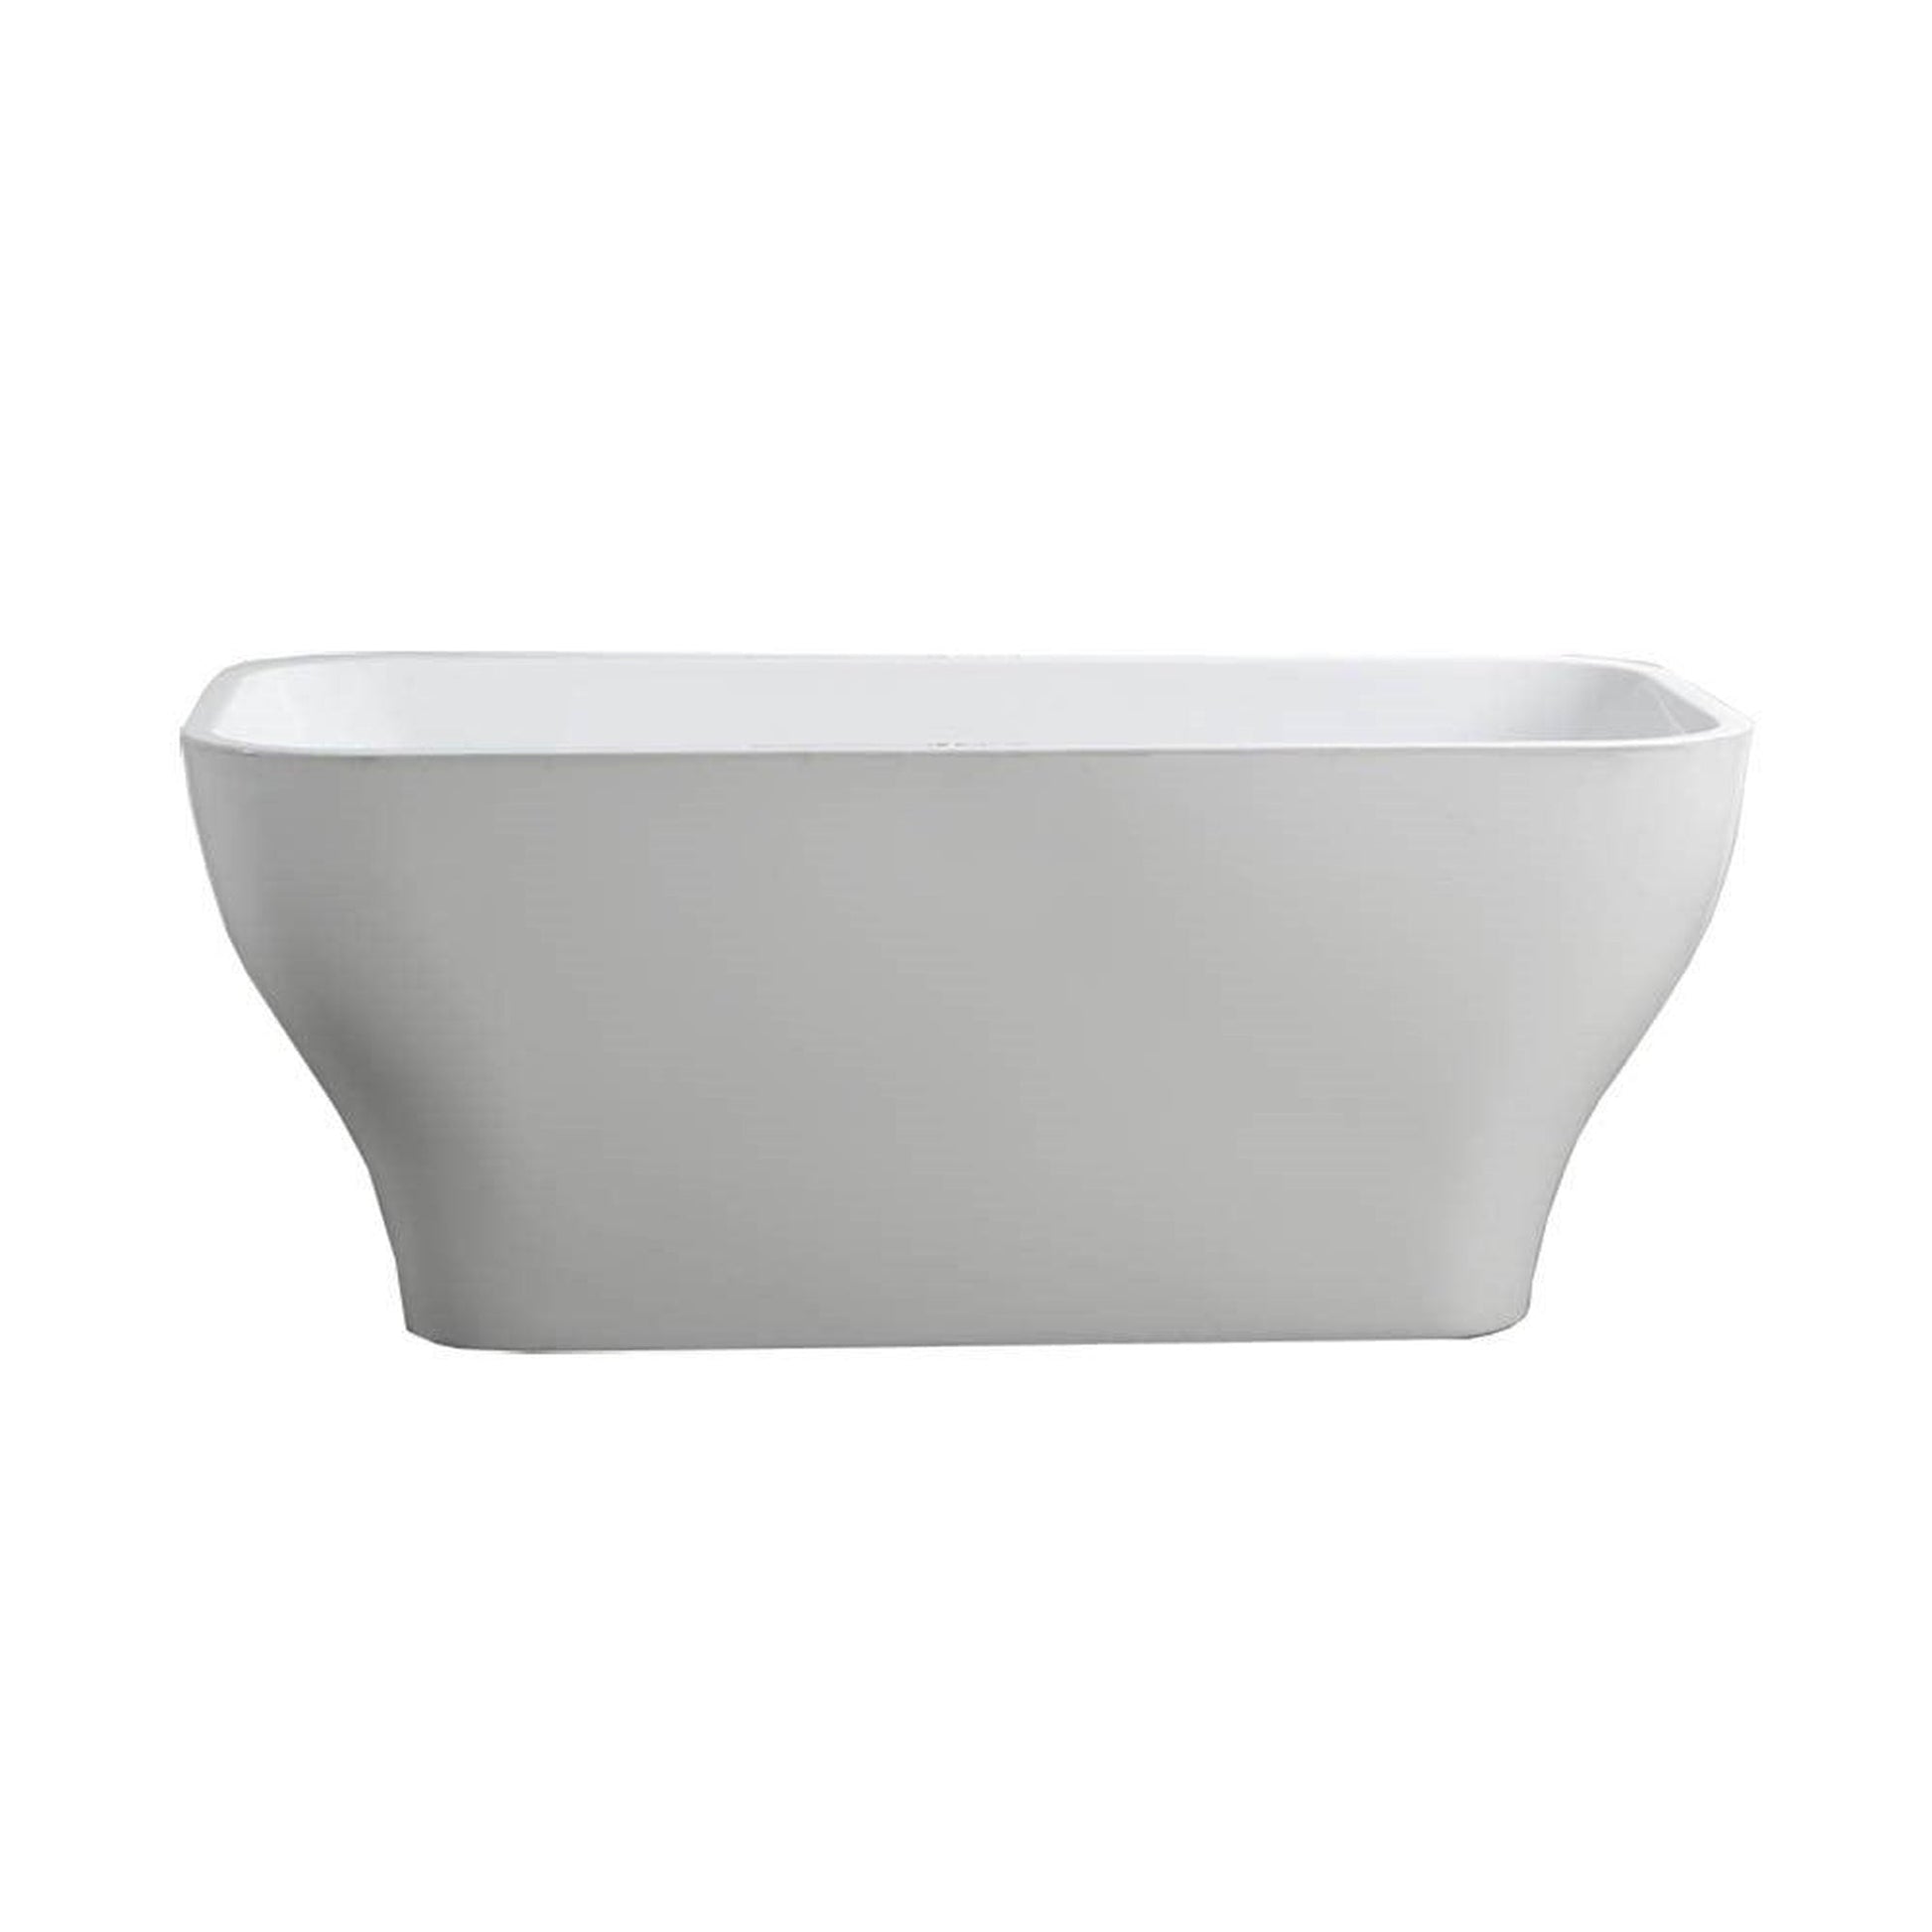 Bellaterra Home Novara 59" x 24" Glossy White Rectangle Acrylic Freestanding Soaking Bathtub